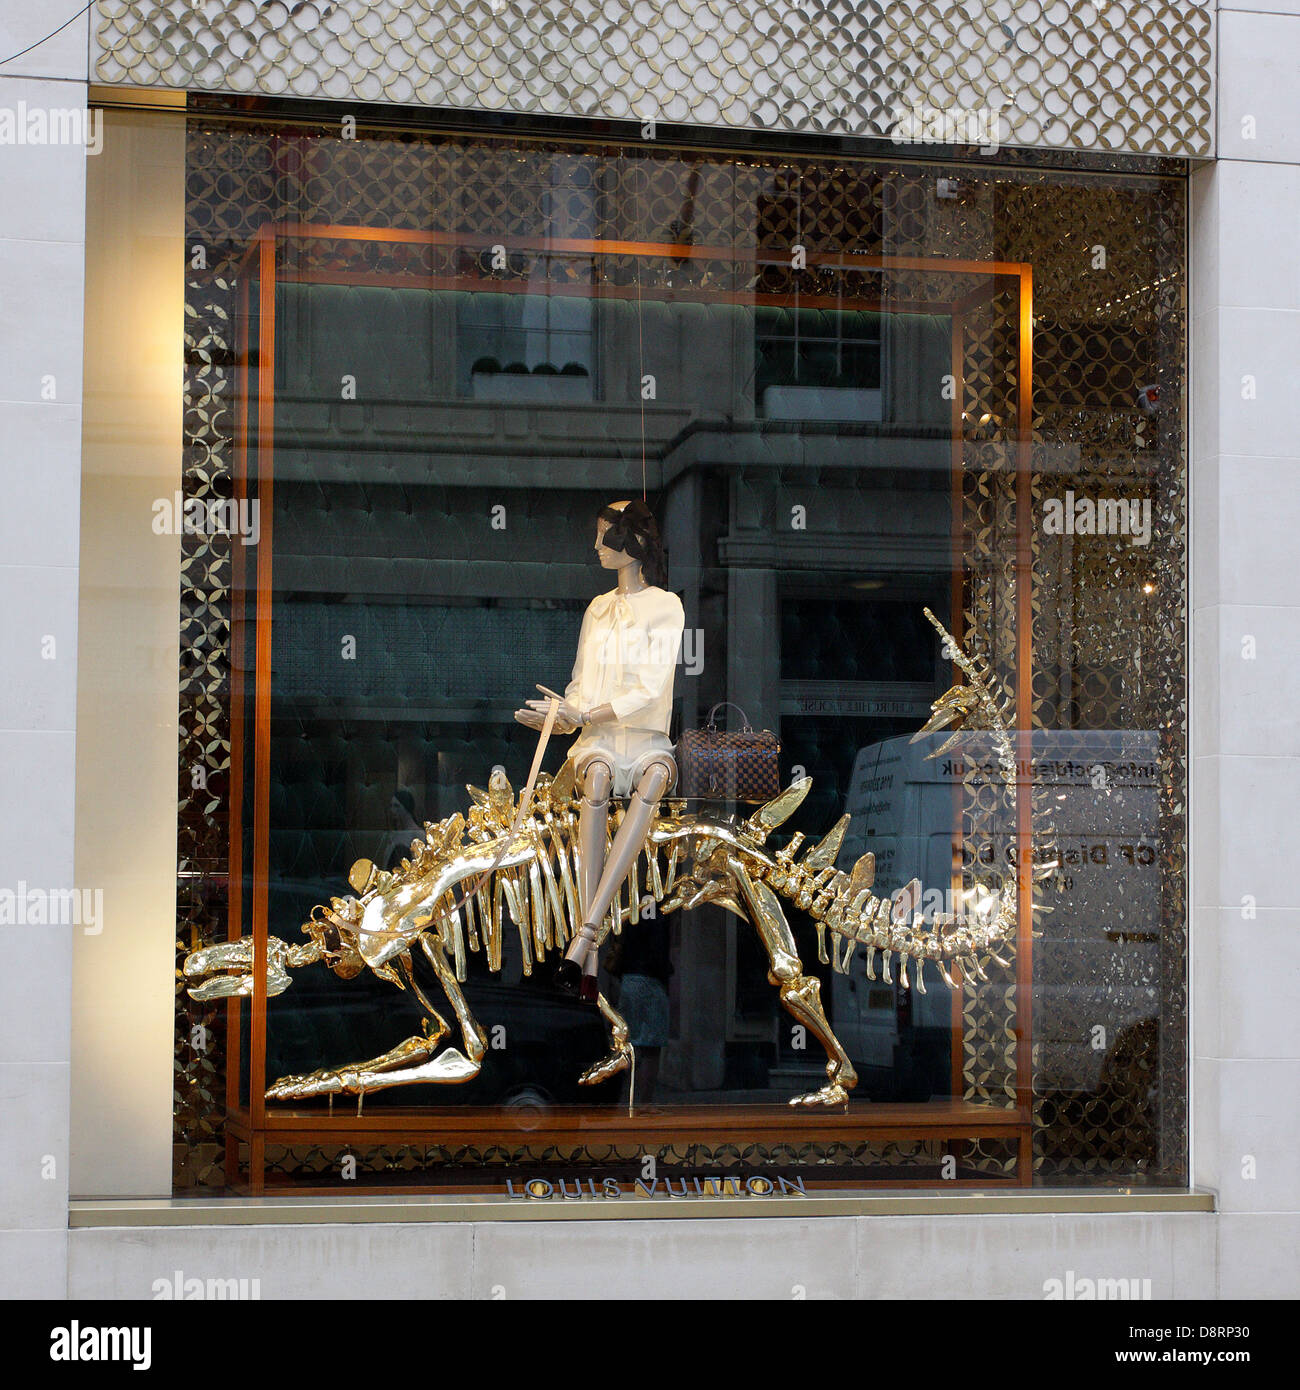 713 Louis Vuitton Shop Window Display Stock Photos, High-Res